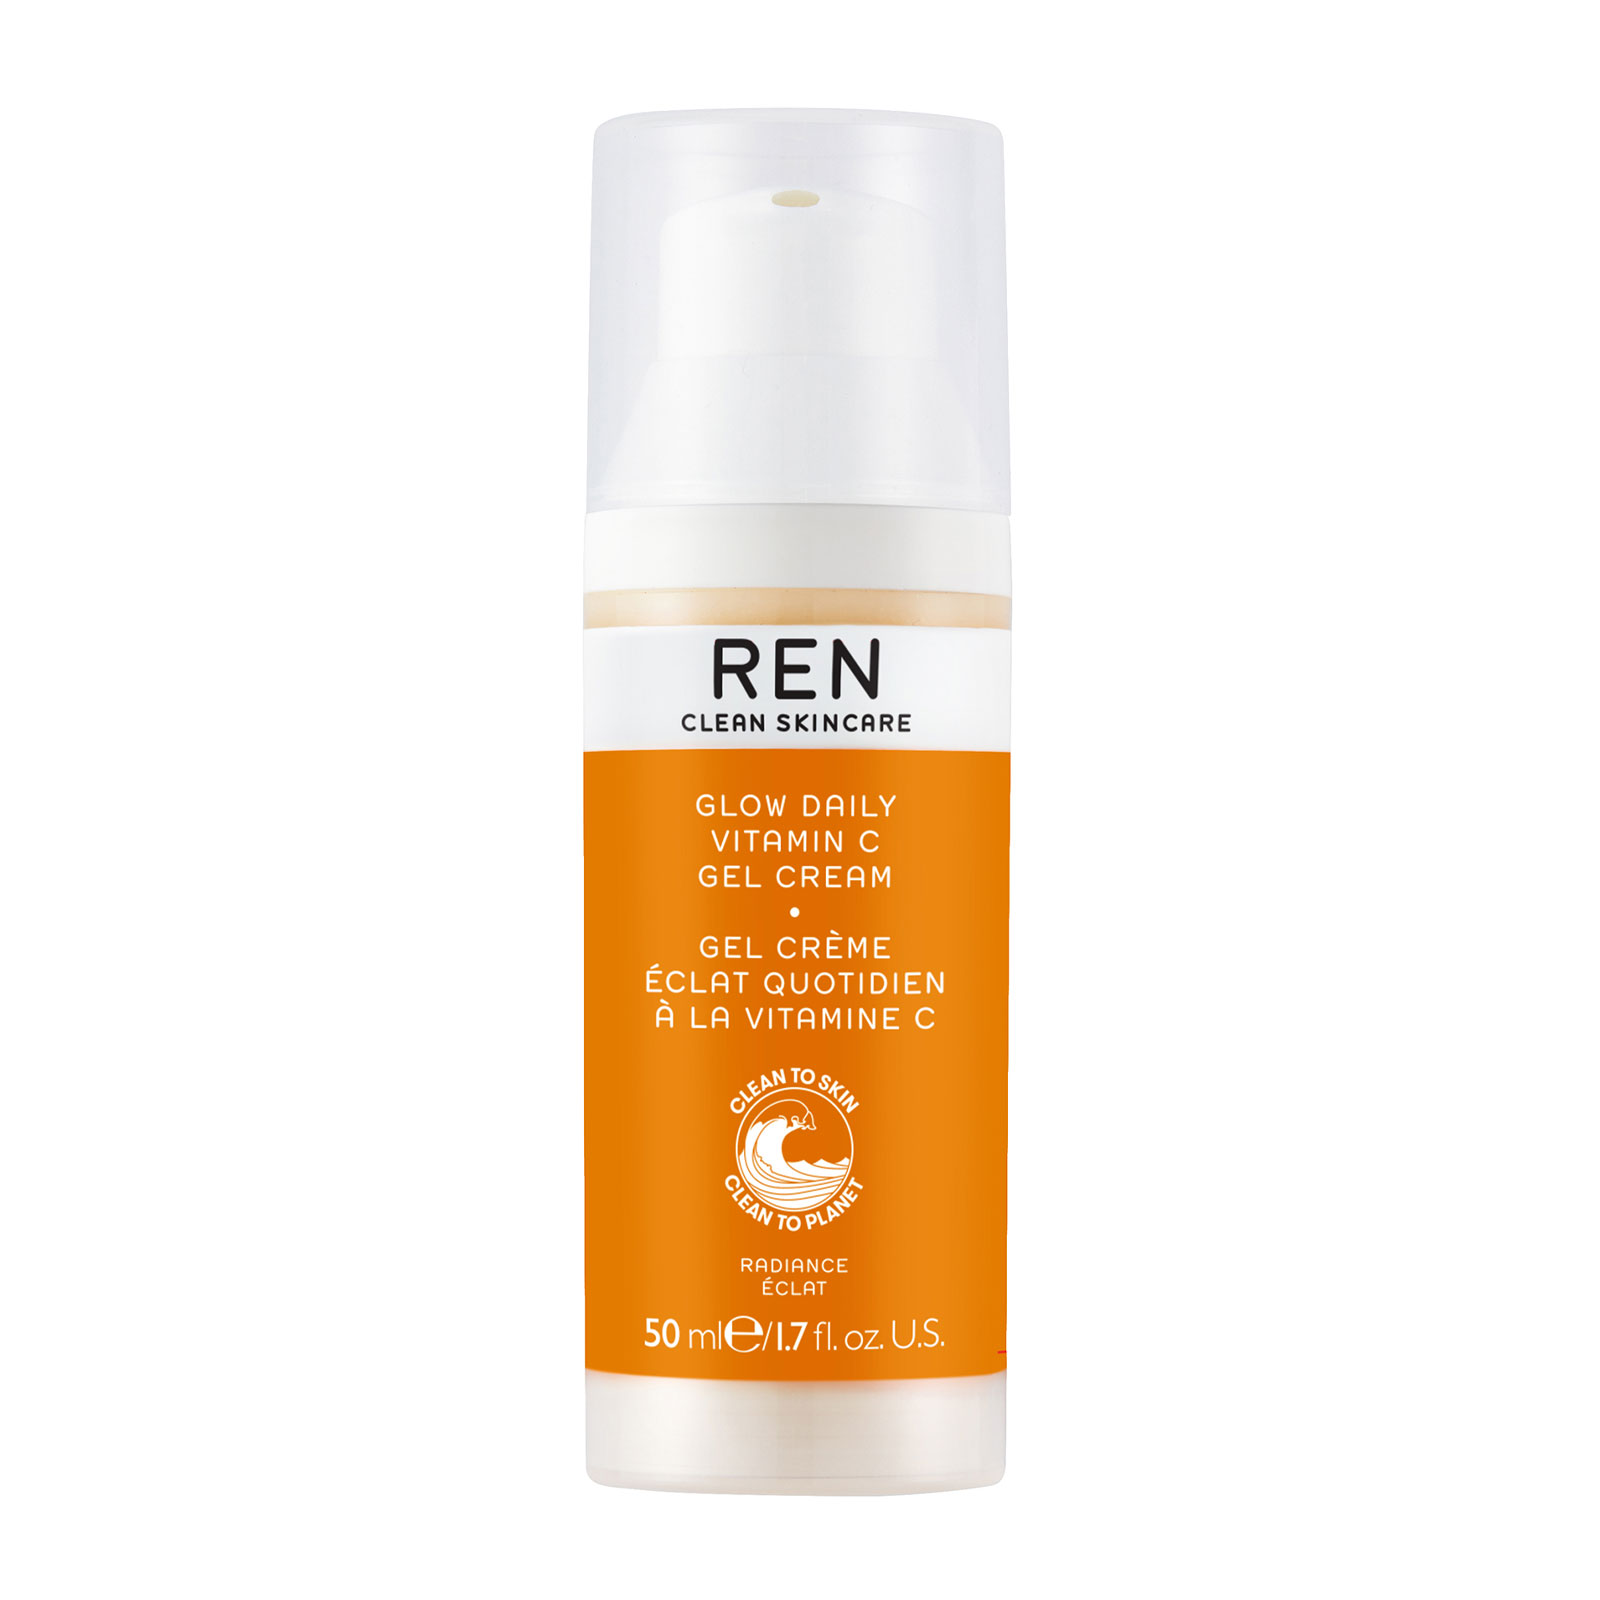 Ren Clean Skincare Radiance Glow Daily Vitamin C Gel Cream 50ml